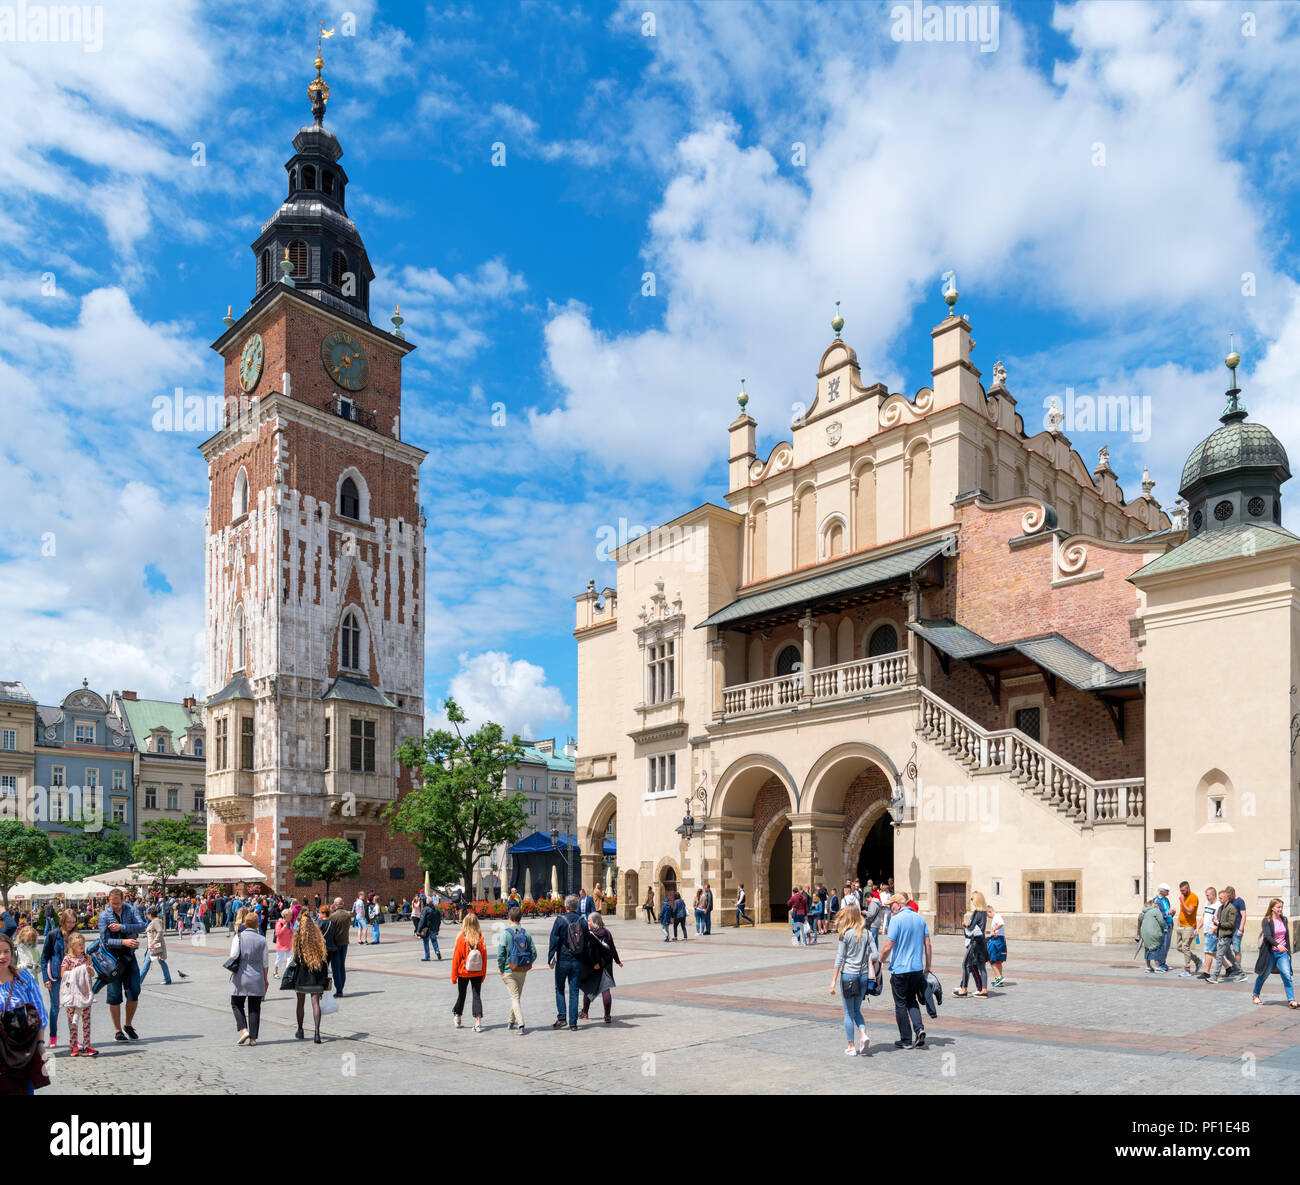 Krakauer Altstadt. Rathaus turm (Wieża ratuszowa) und Tuchhallen (Sukiennice) auf dem Marktplatz (Rynek Główny), Kraków, Polen Stockfoto